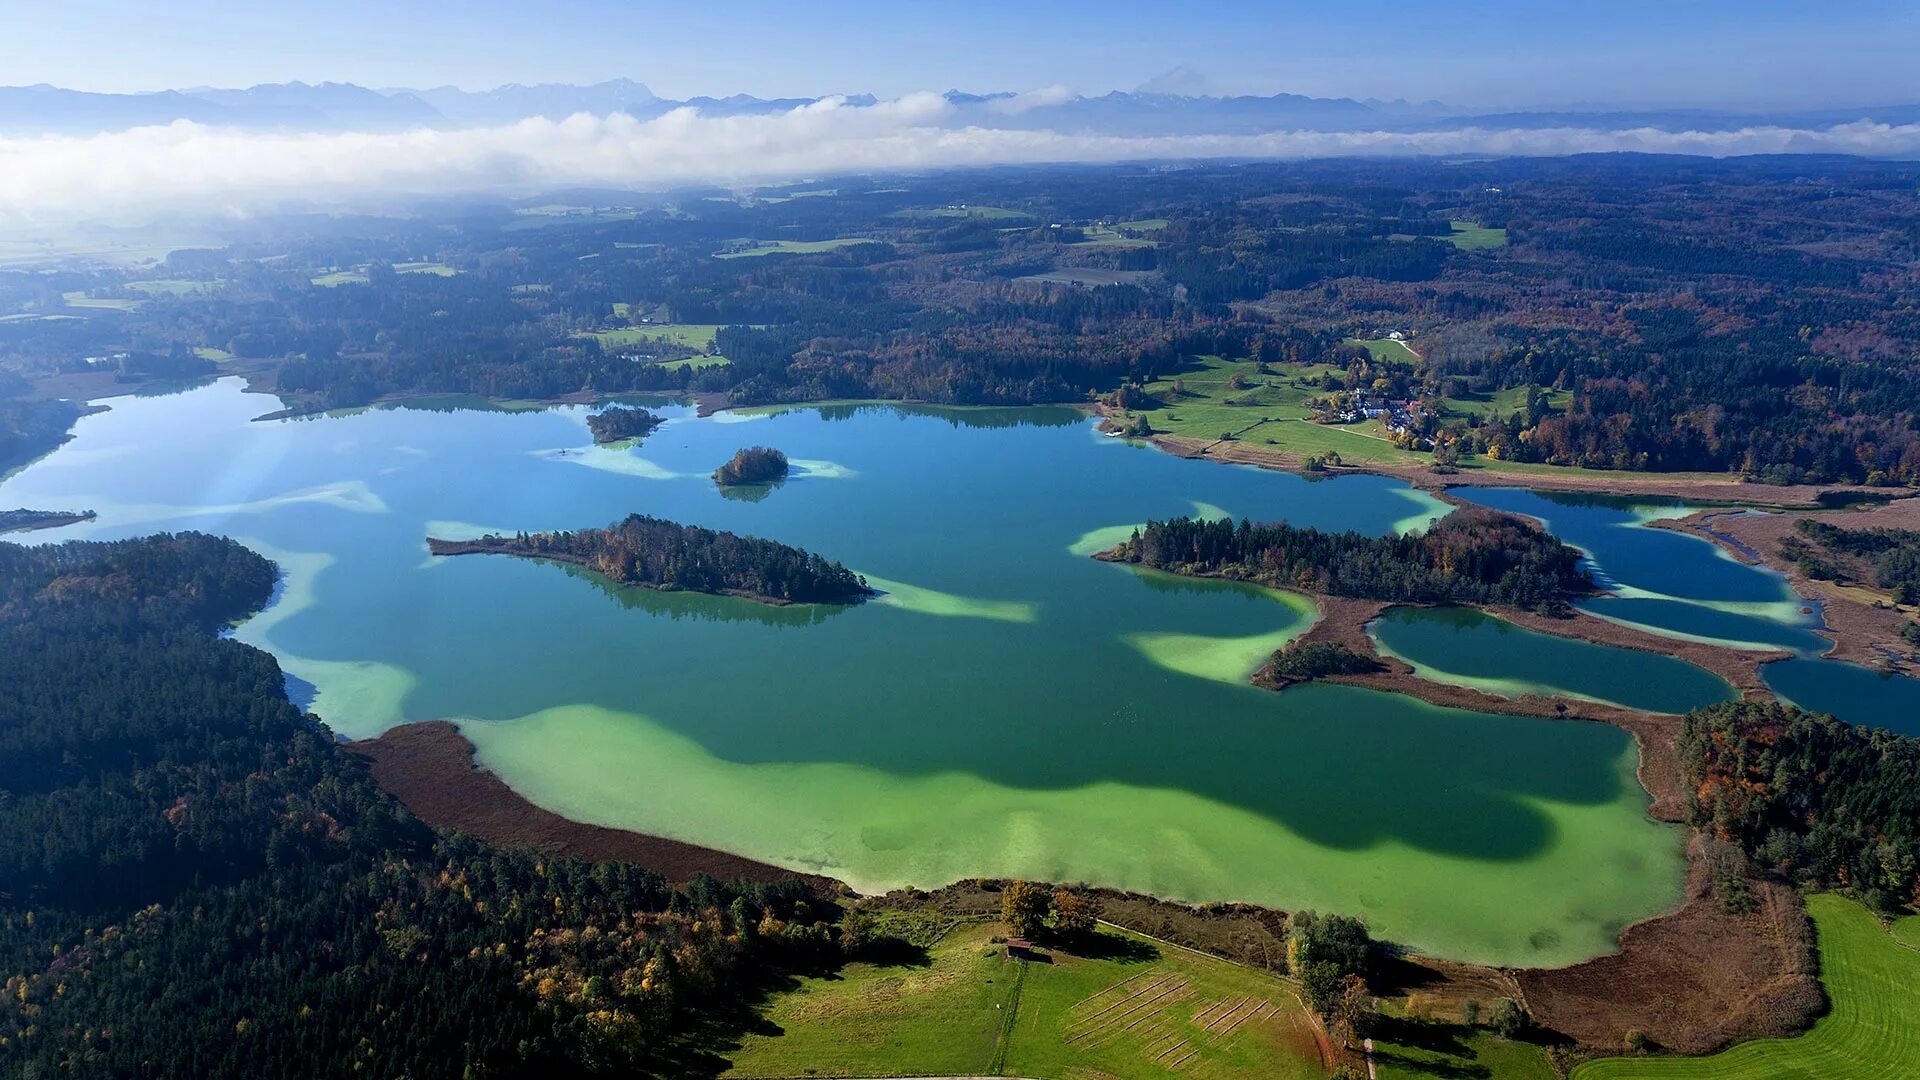 Озеро Тегернзее в Баварии. Кимзее озеро Германия. Германия озеро Штессензее. Озеро Шрек в Германии.